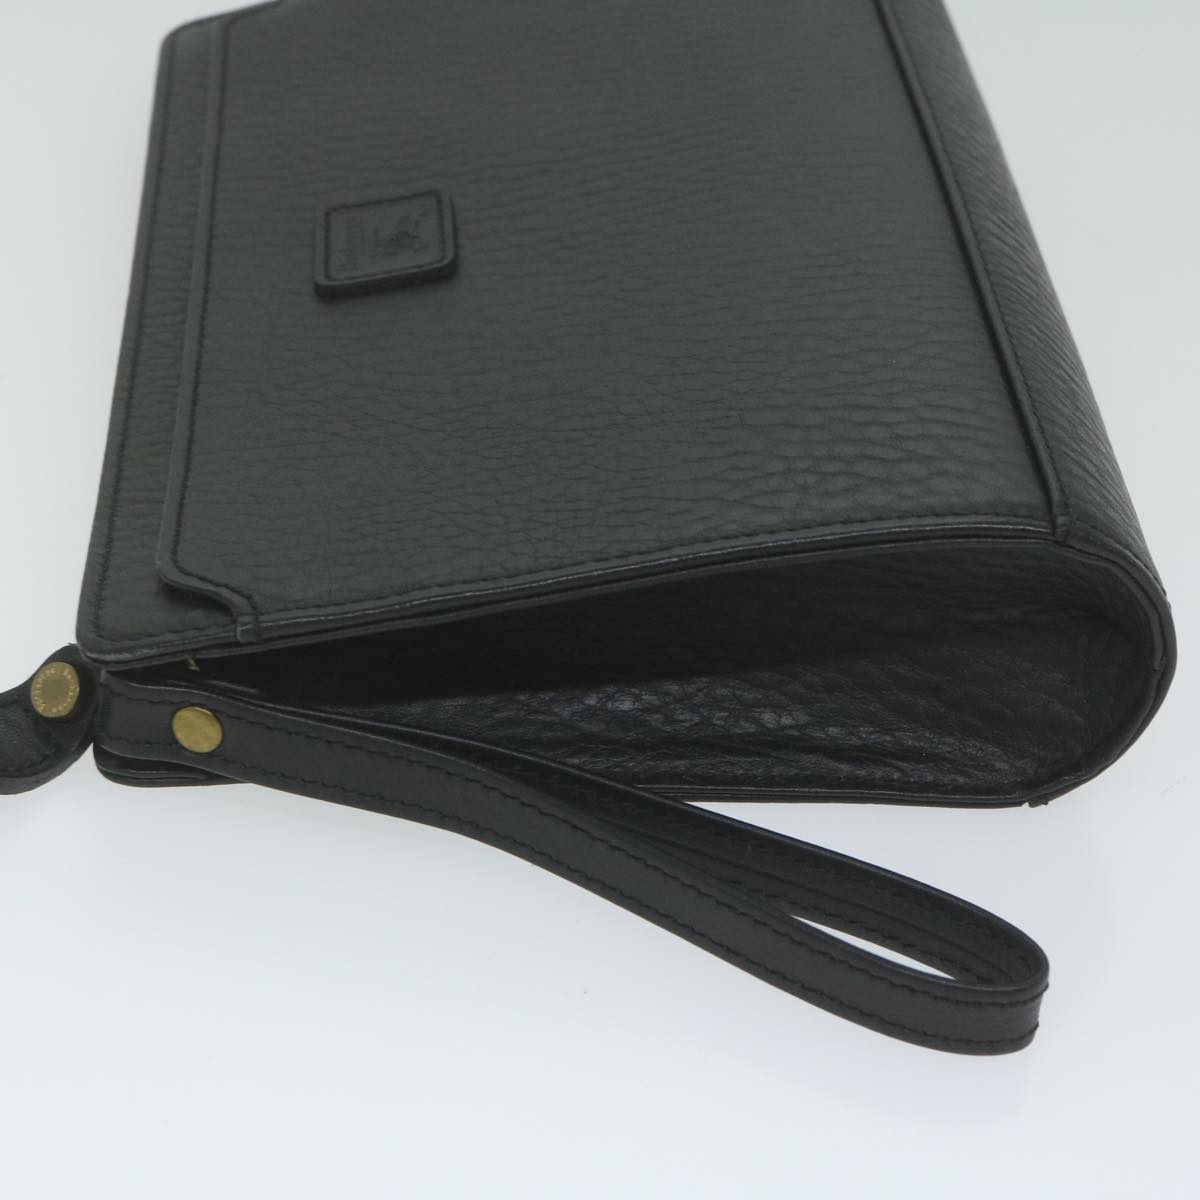 Burberrys Clutch Bag Leather Black Auth ac2560